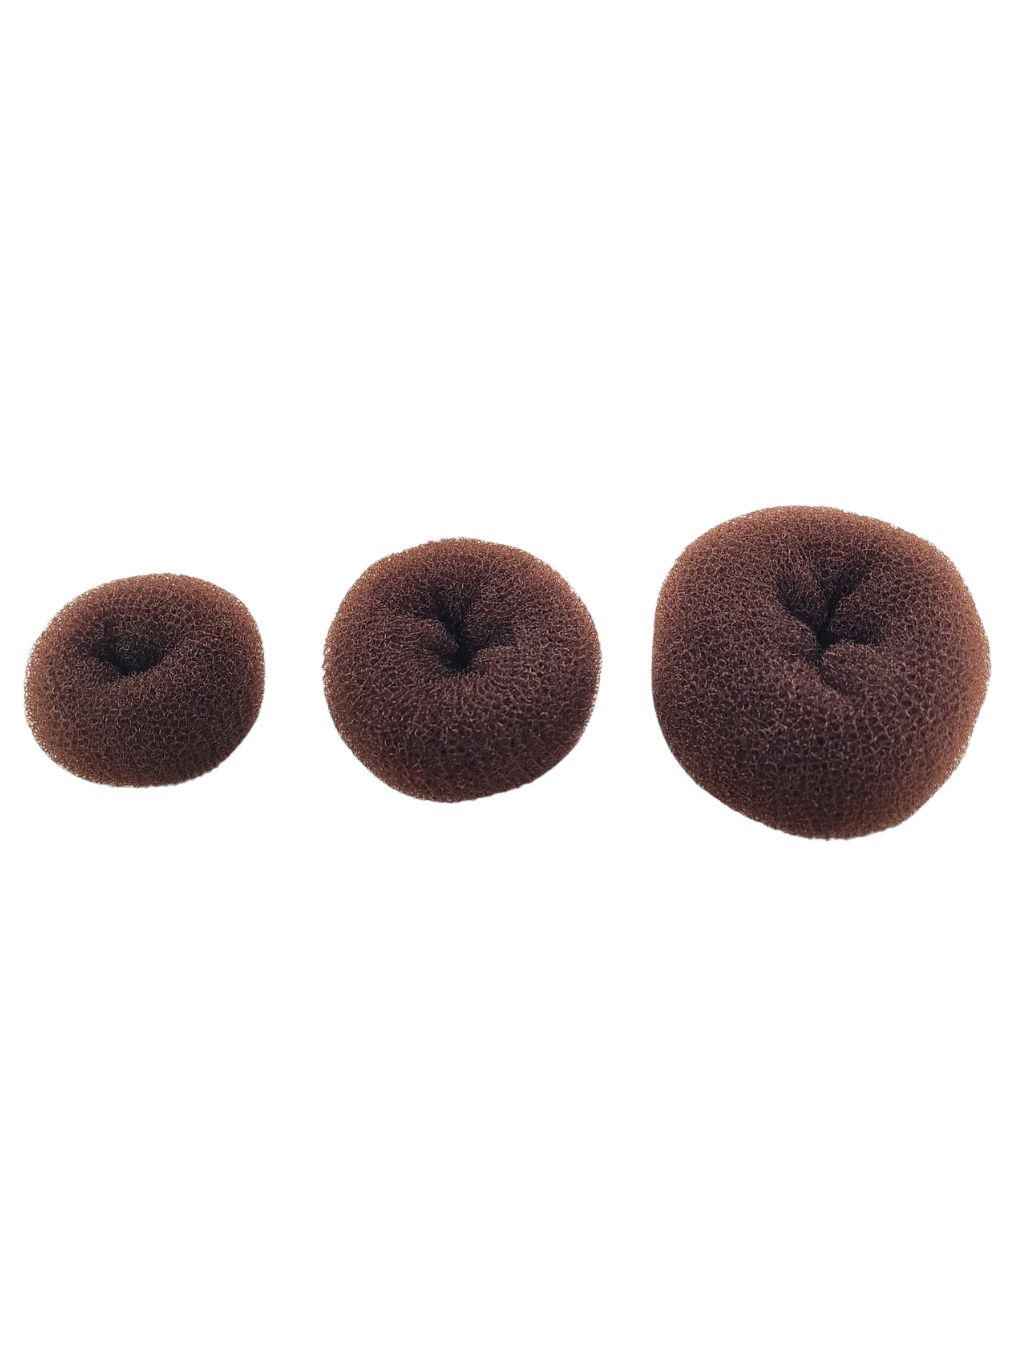 Brown Donut Hair Bun Set 2